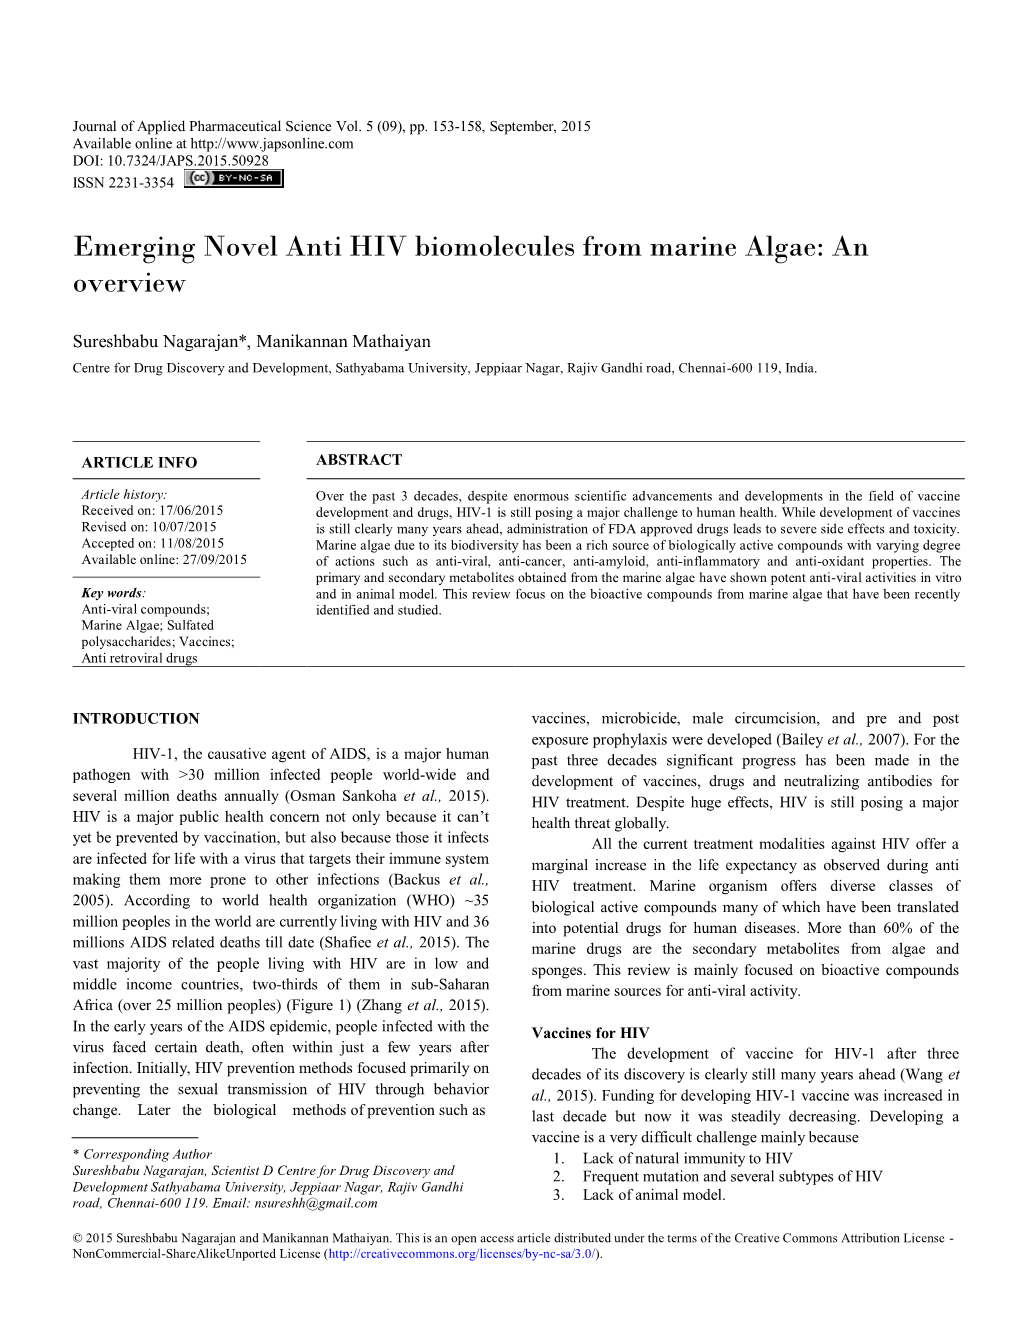 Emerging Novel Anti HIV Biomolecules from Marine Algae: an Overview